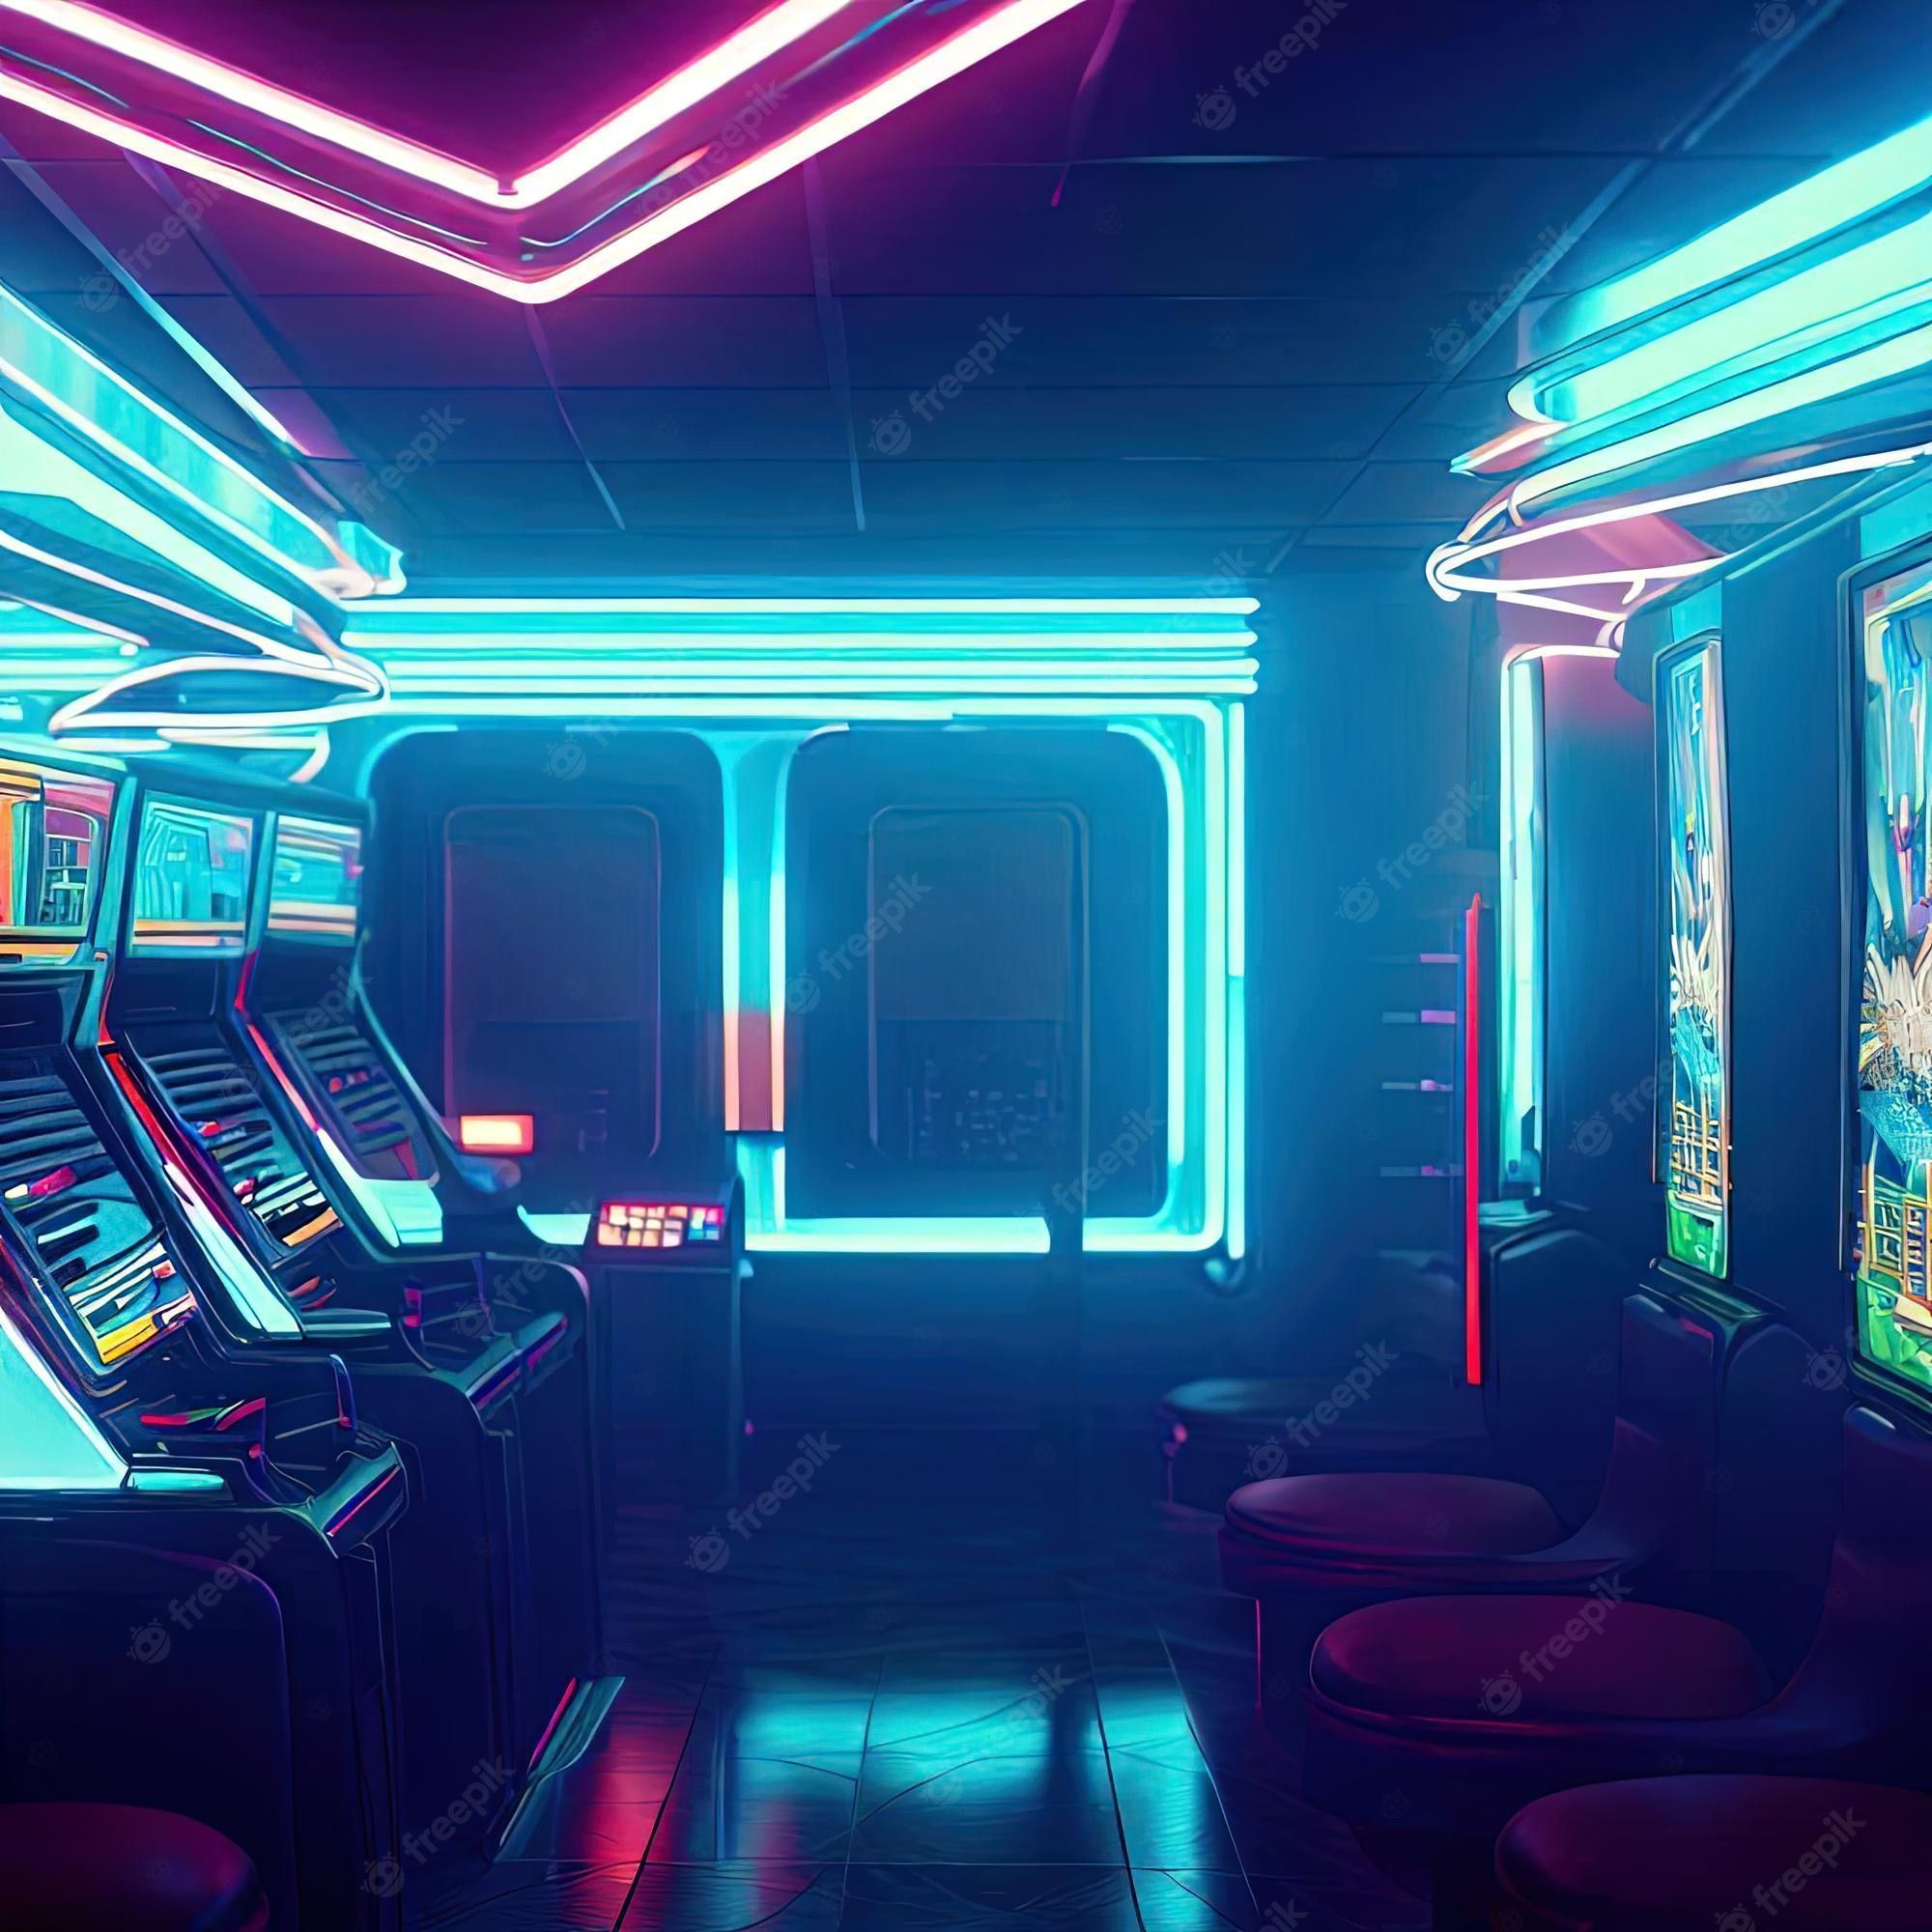 Arcade Room Background Image